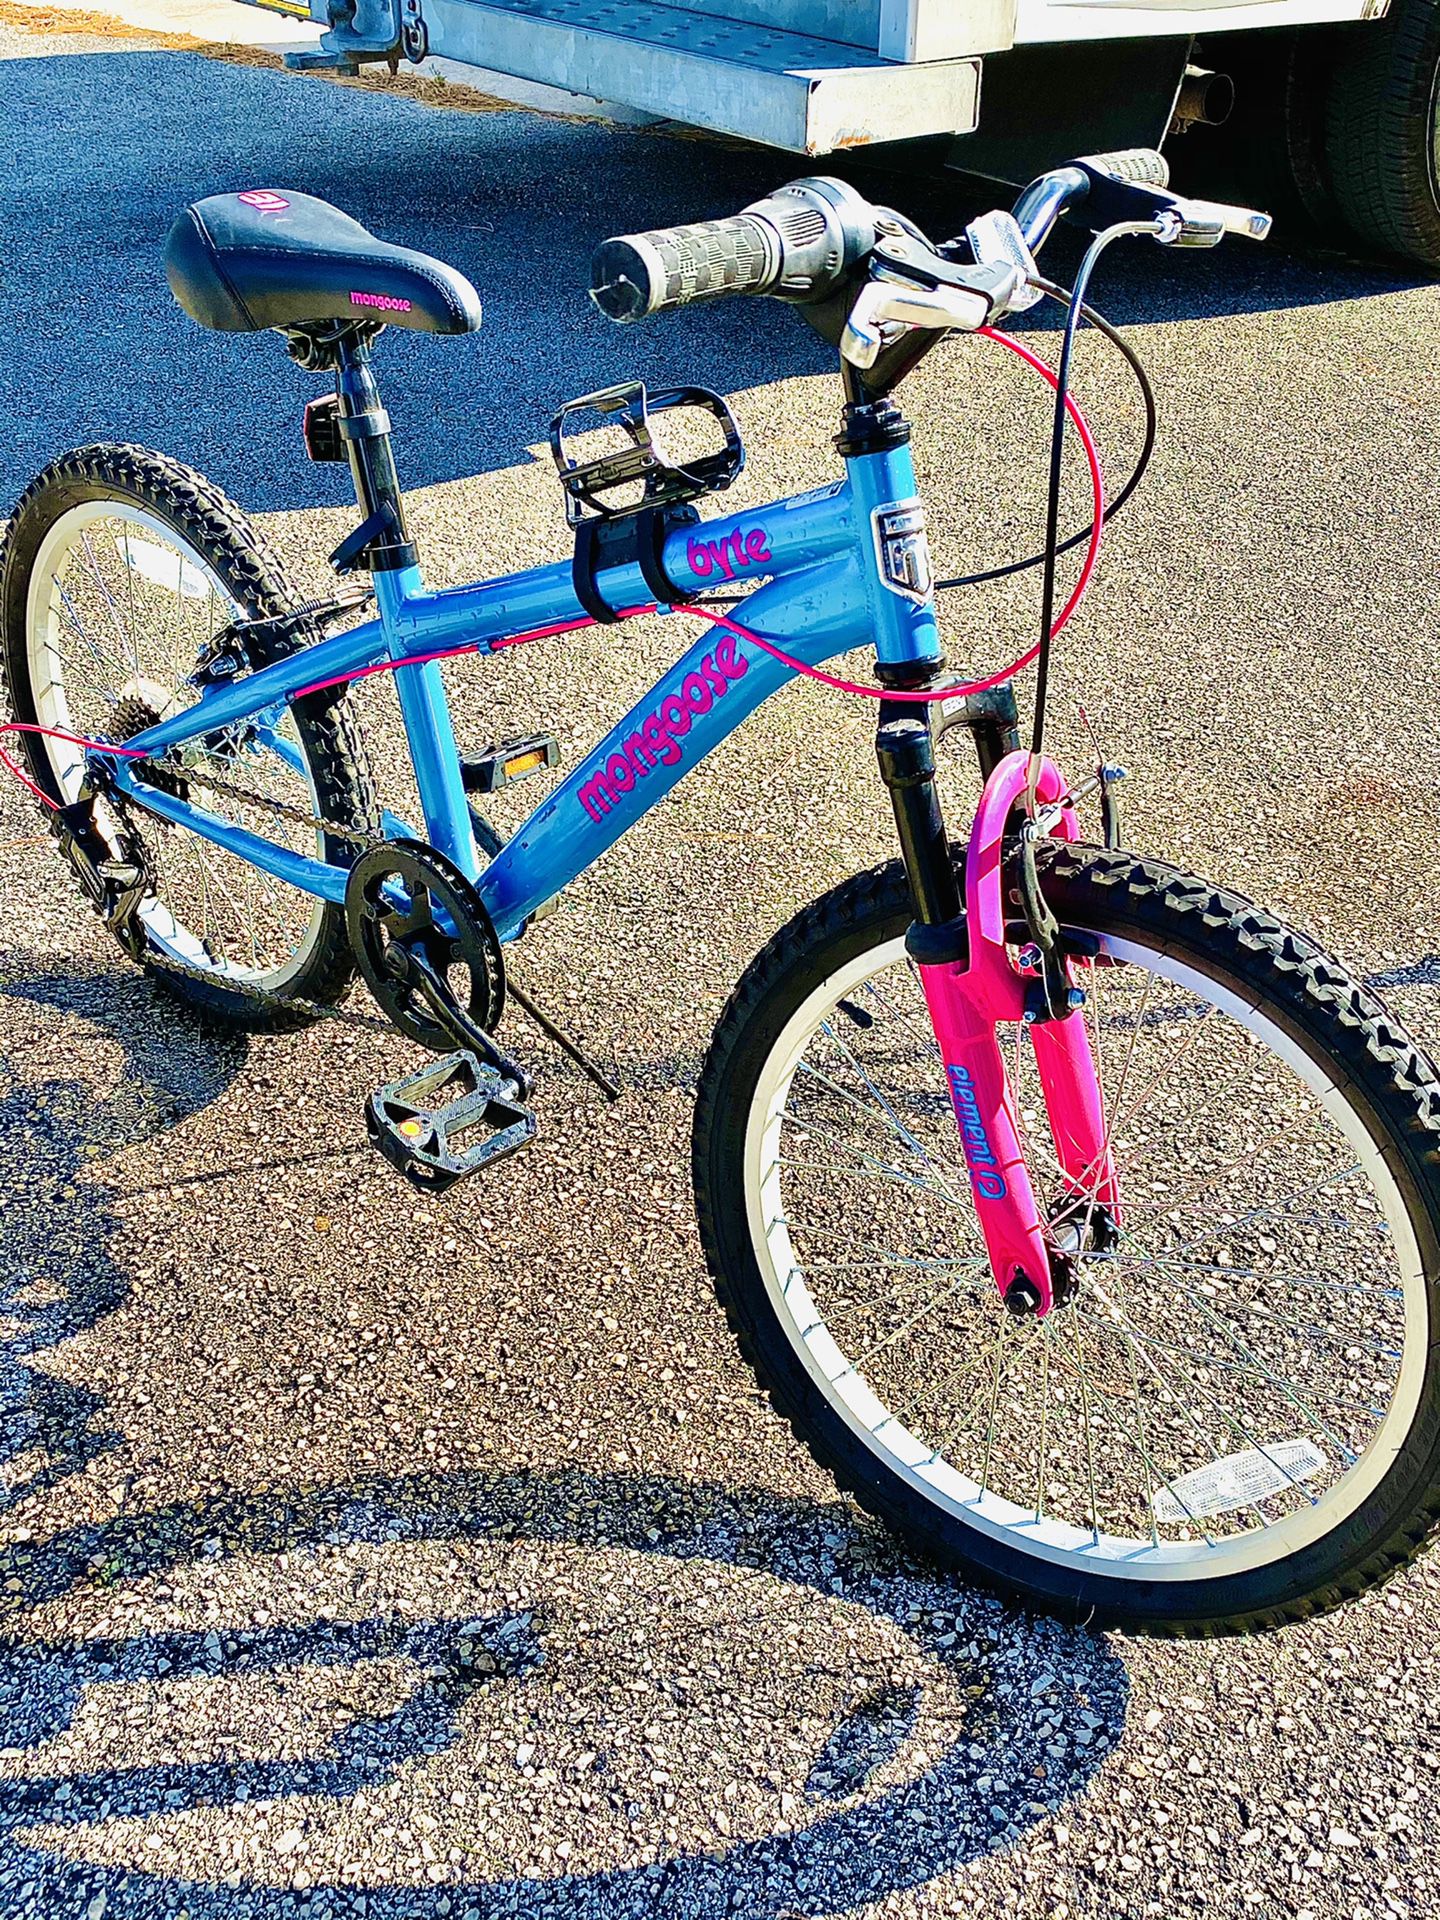 ($200 Retail) *LIKE NEW* Mongoose 20" Byte Girls Mountain Bike, Blue, Pink.